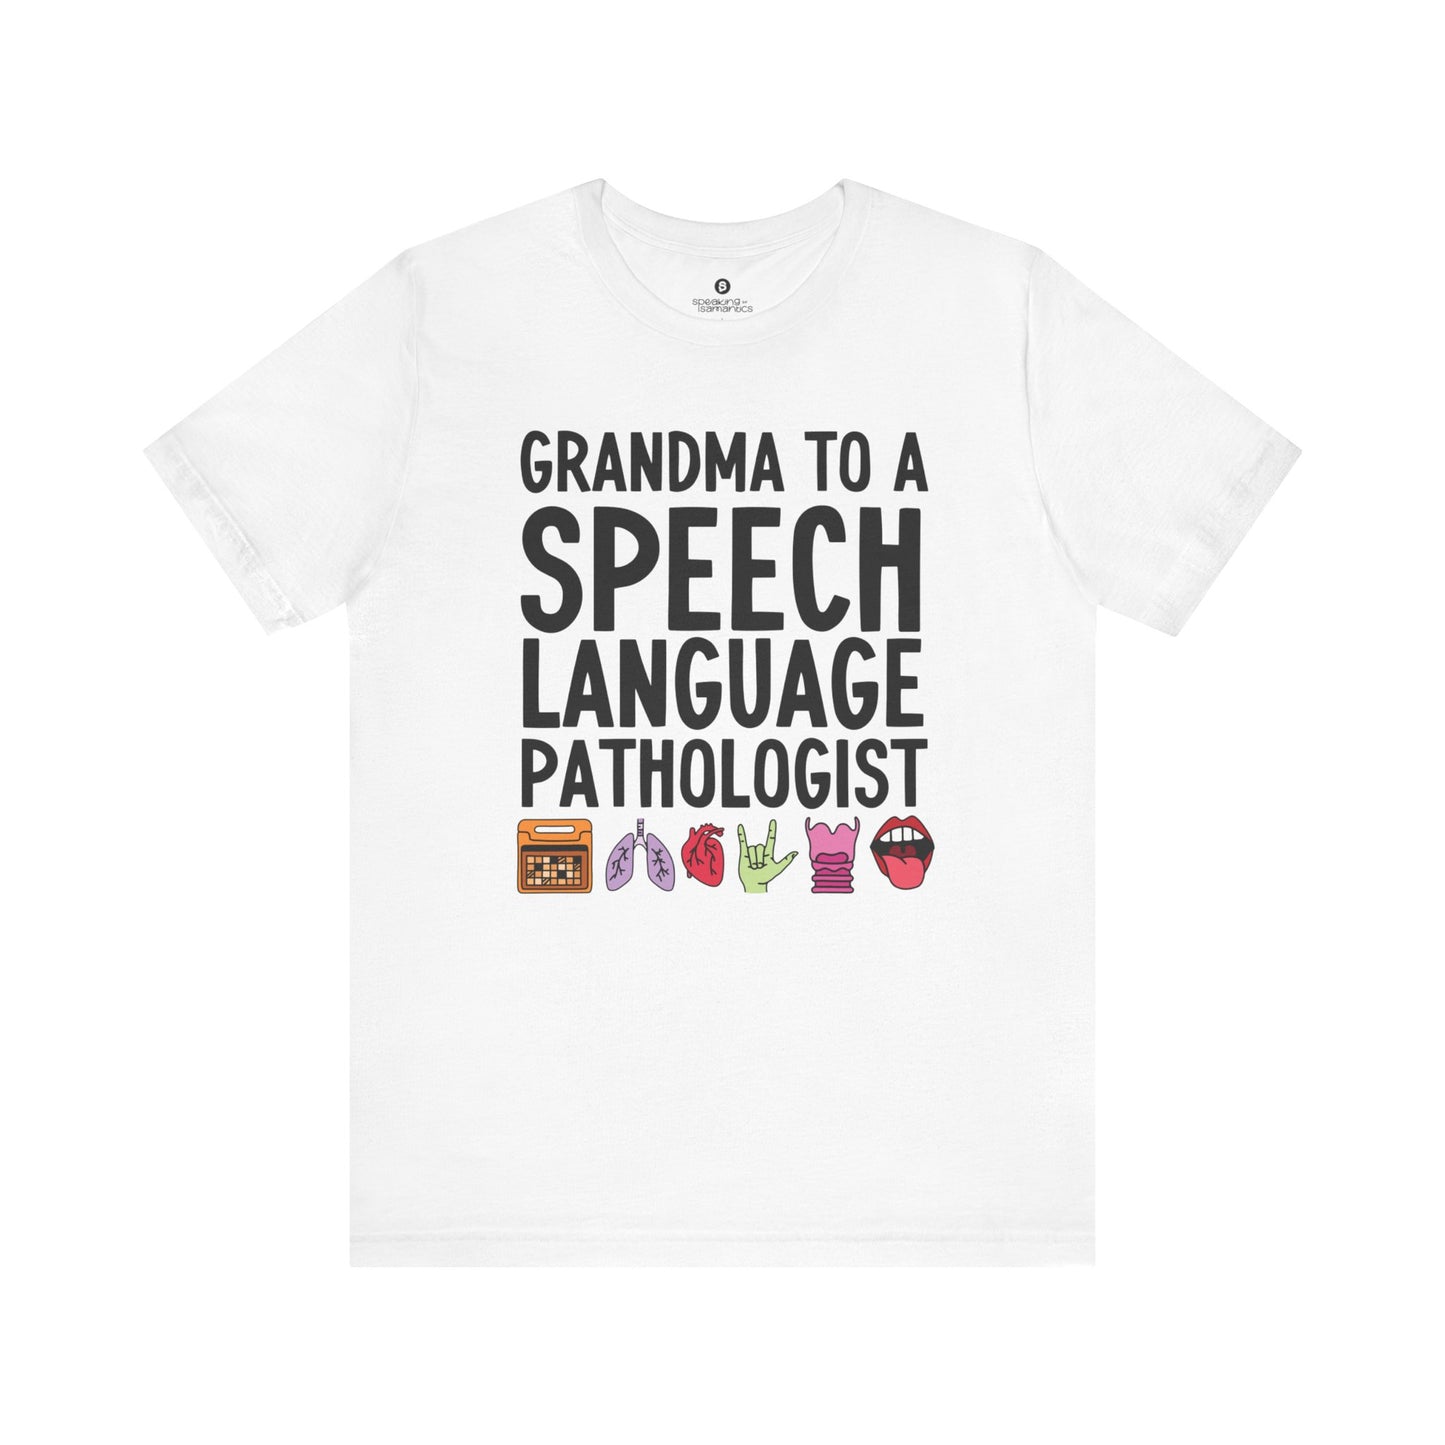 Grandma to a Speech Language Pathologist Tee